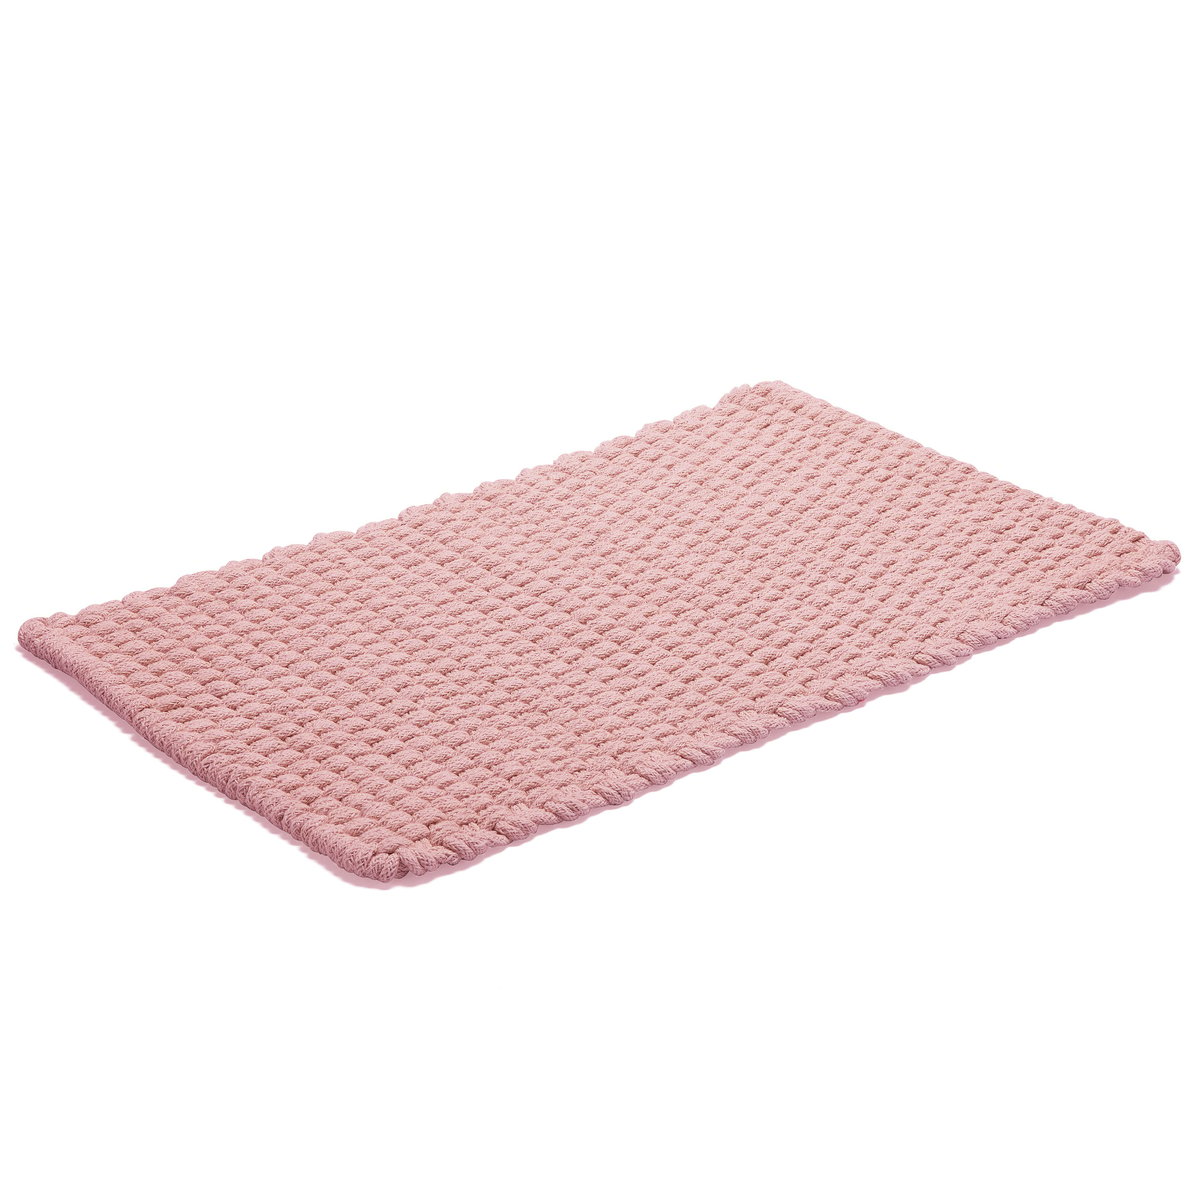 ETOL Design Rope måtte 50x80 cm Dusty pink (7331948709124)